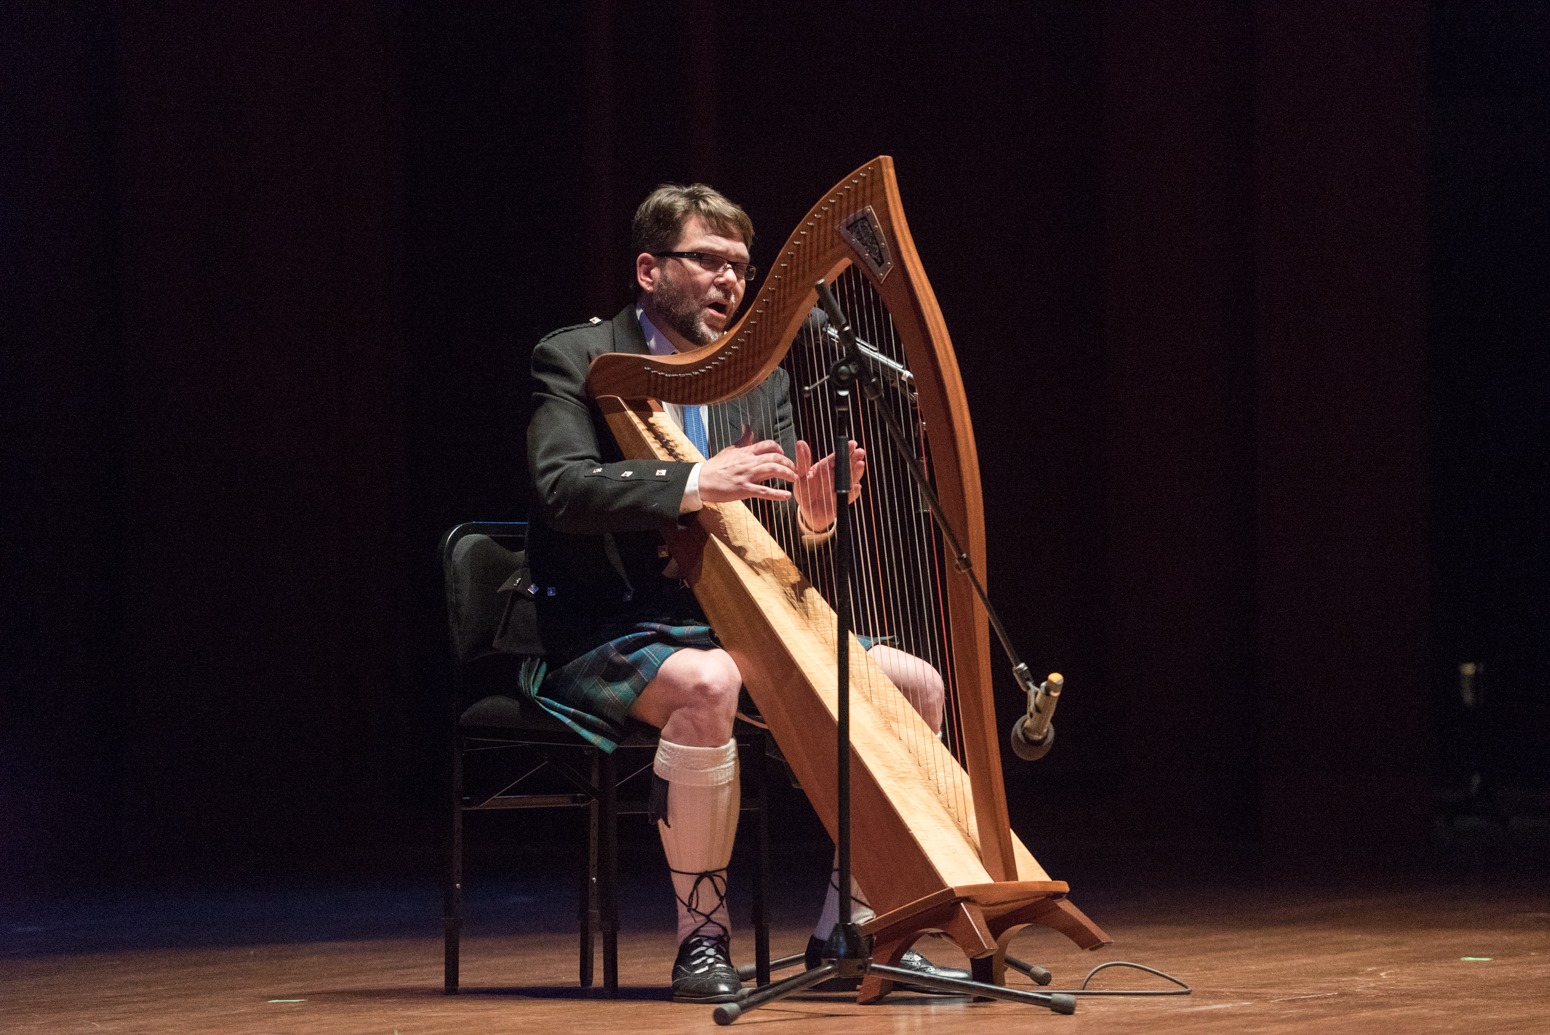 man in kilt seated behind harp on stage singing